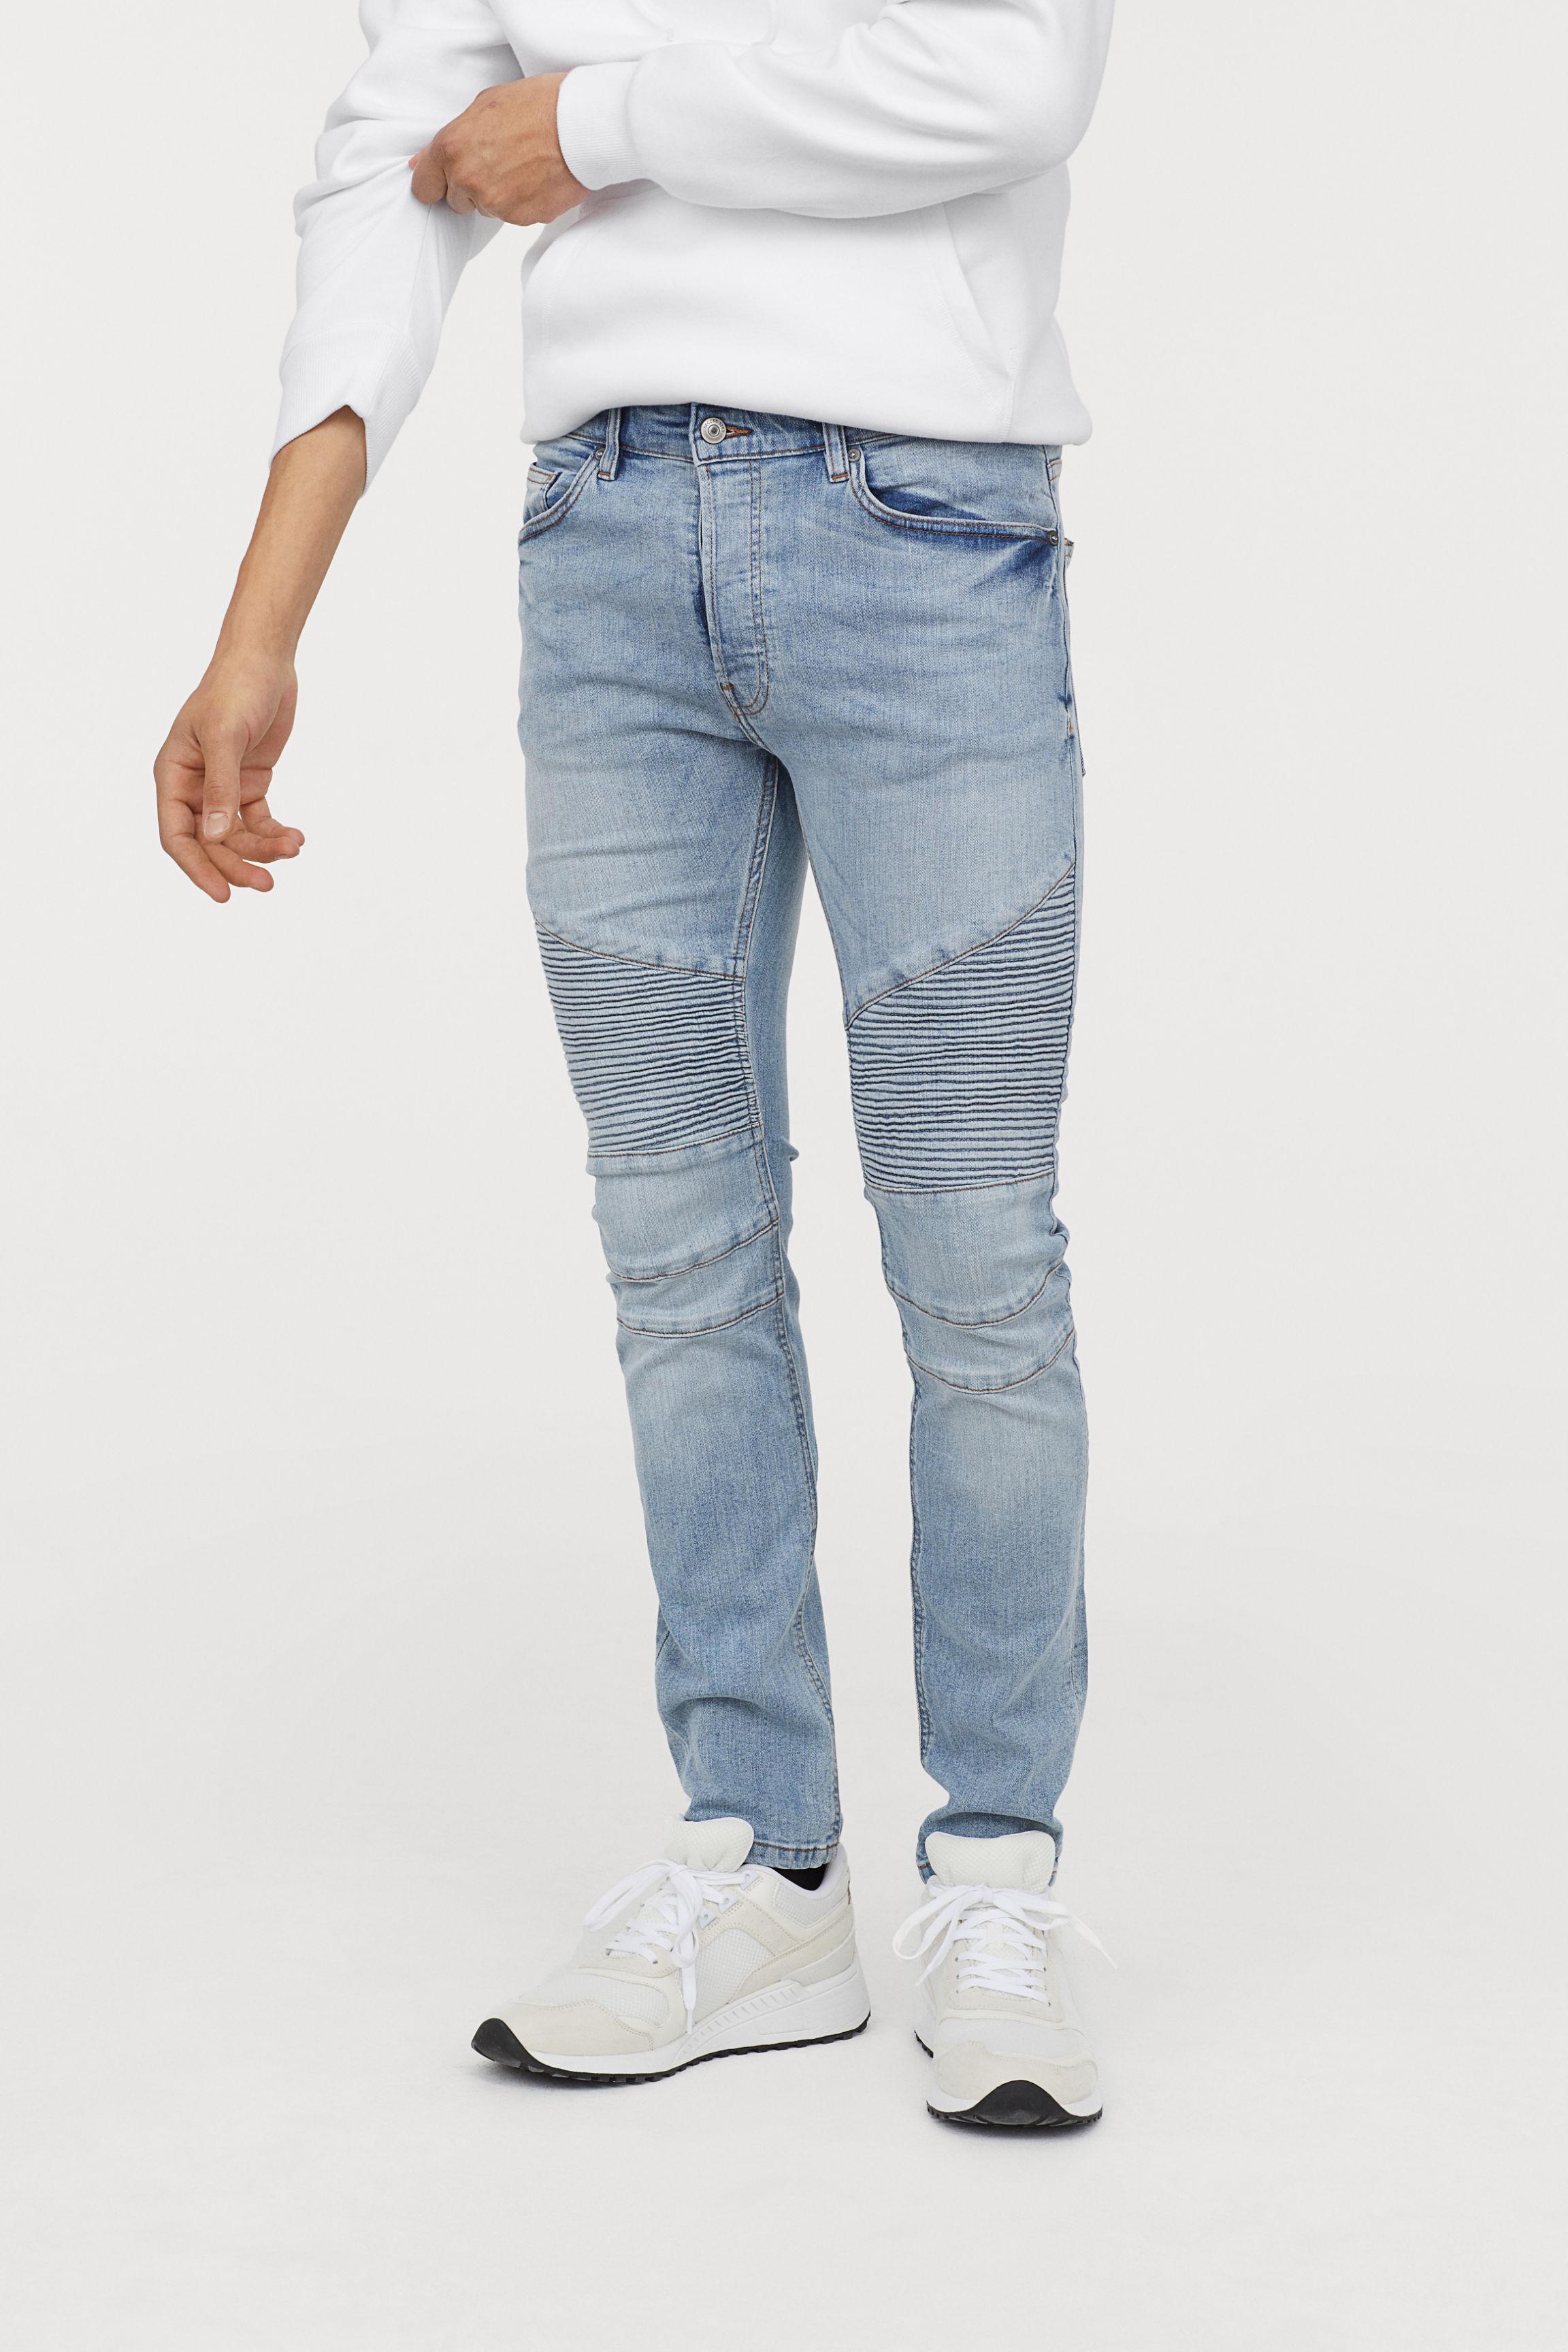 H&M Skinny Jeans in Men | Lyst